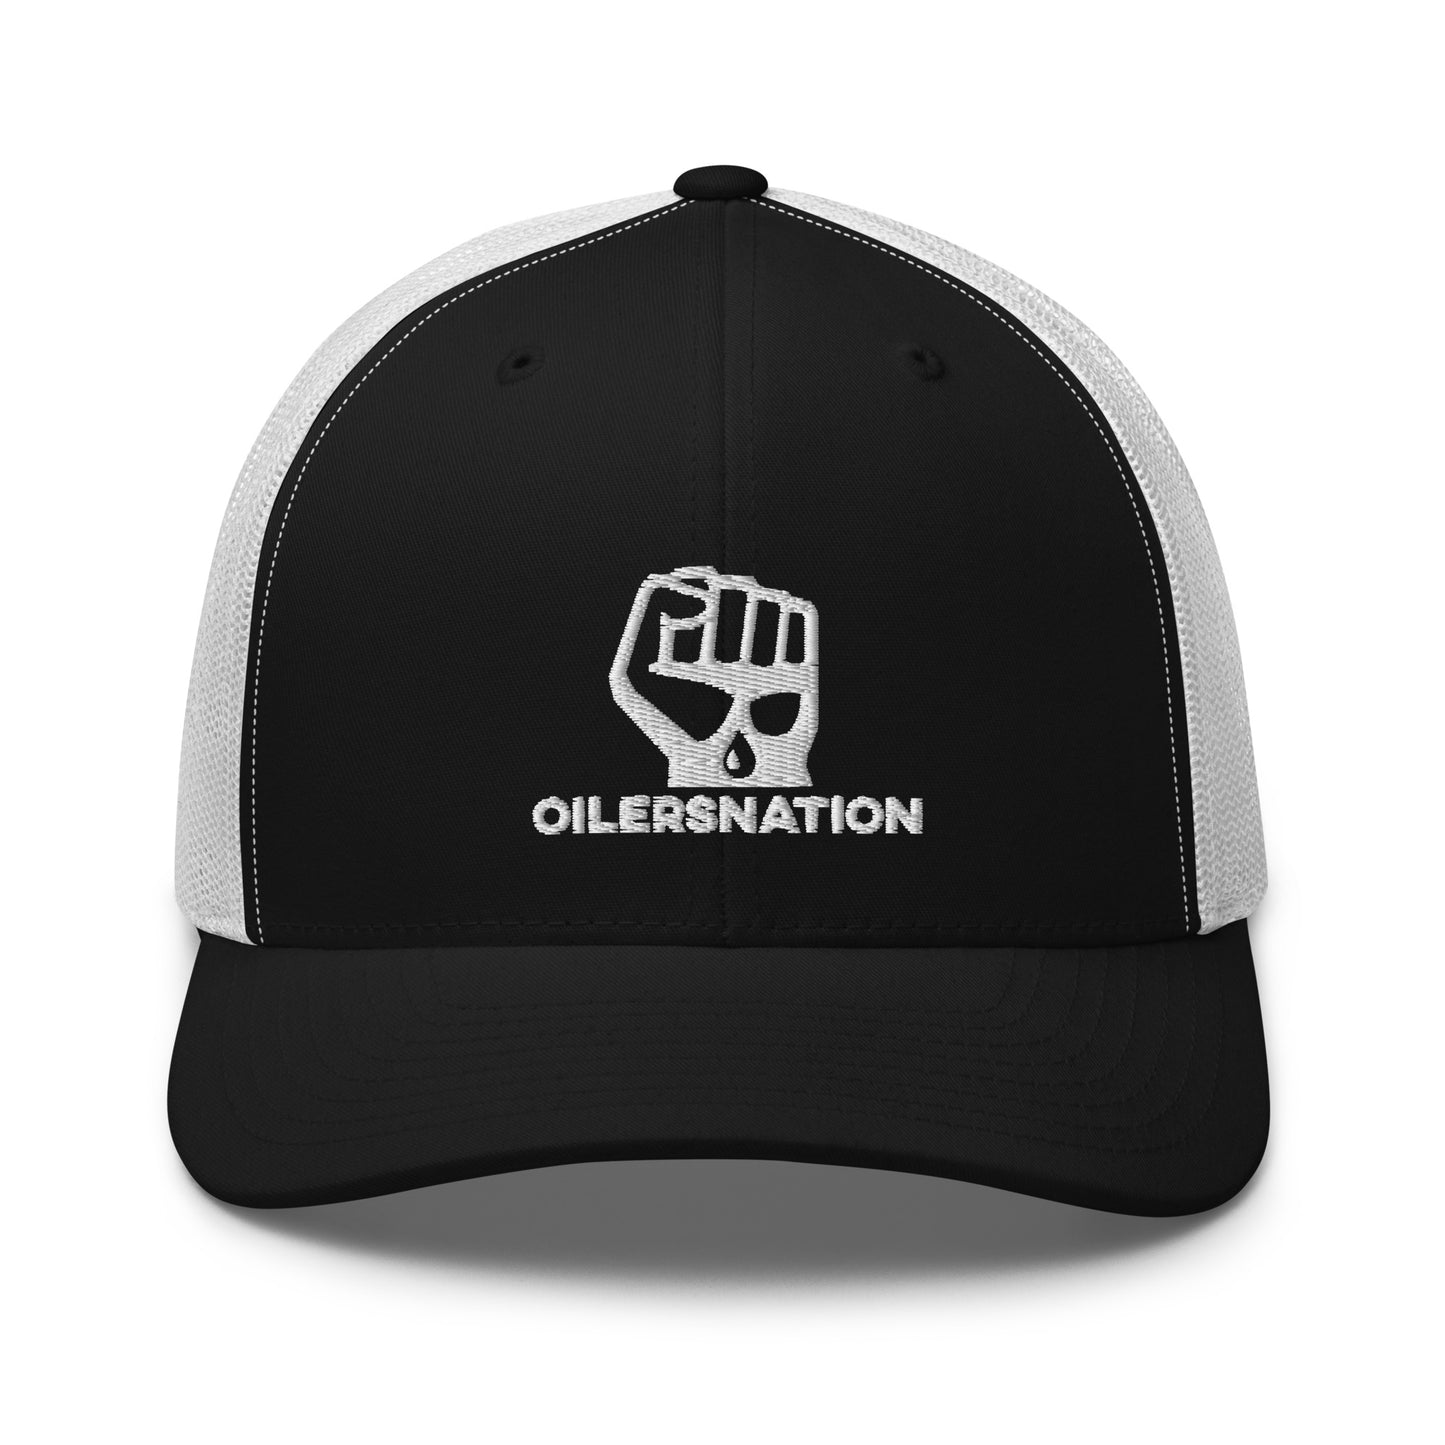 THE CLASSICS - Oilersnation Black Trucker Hat